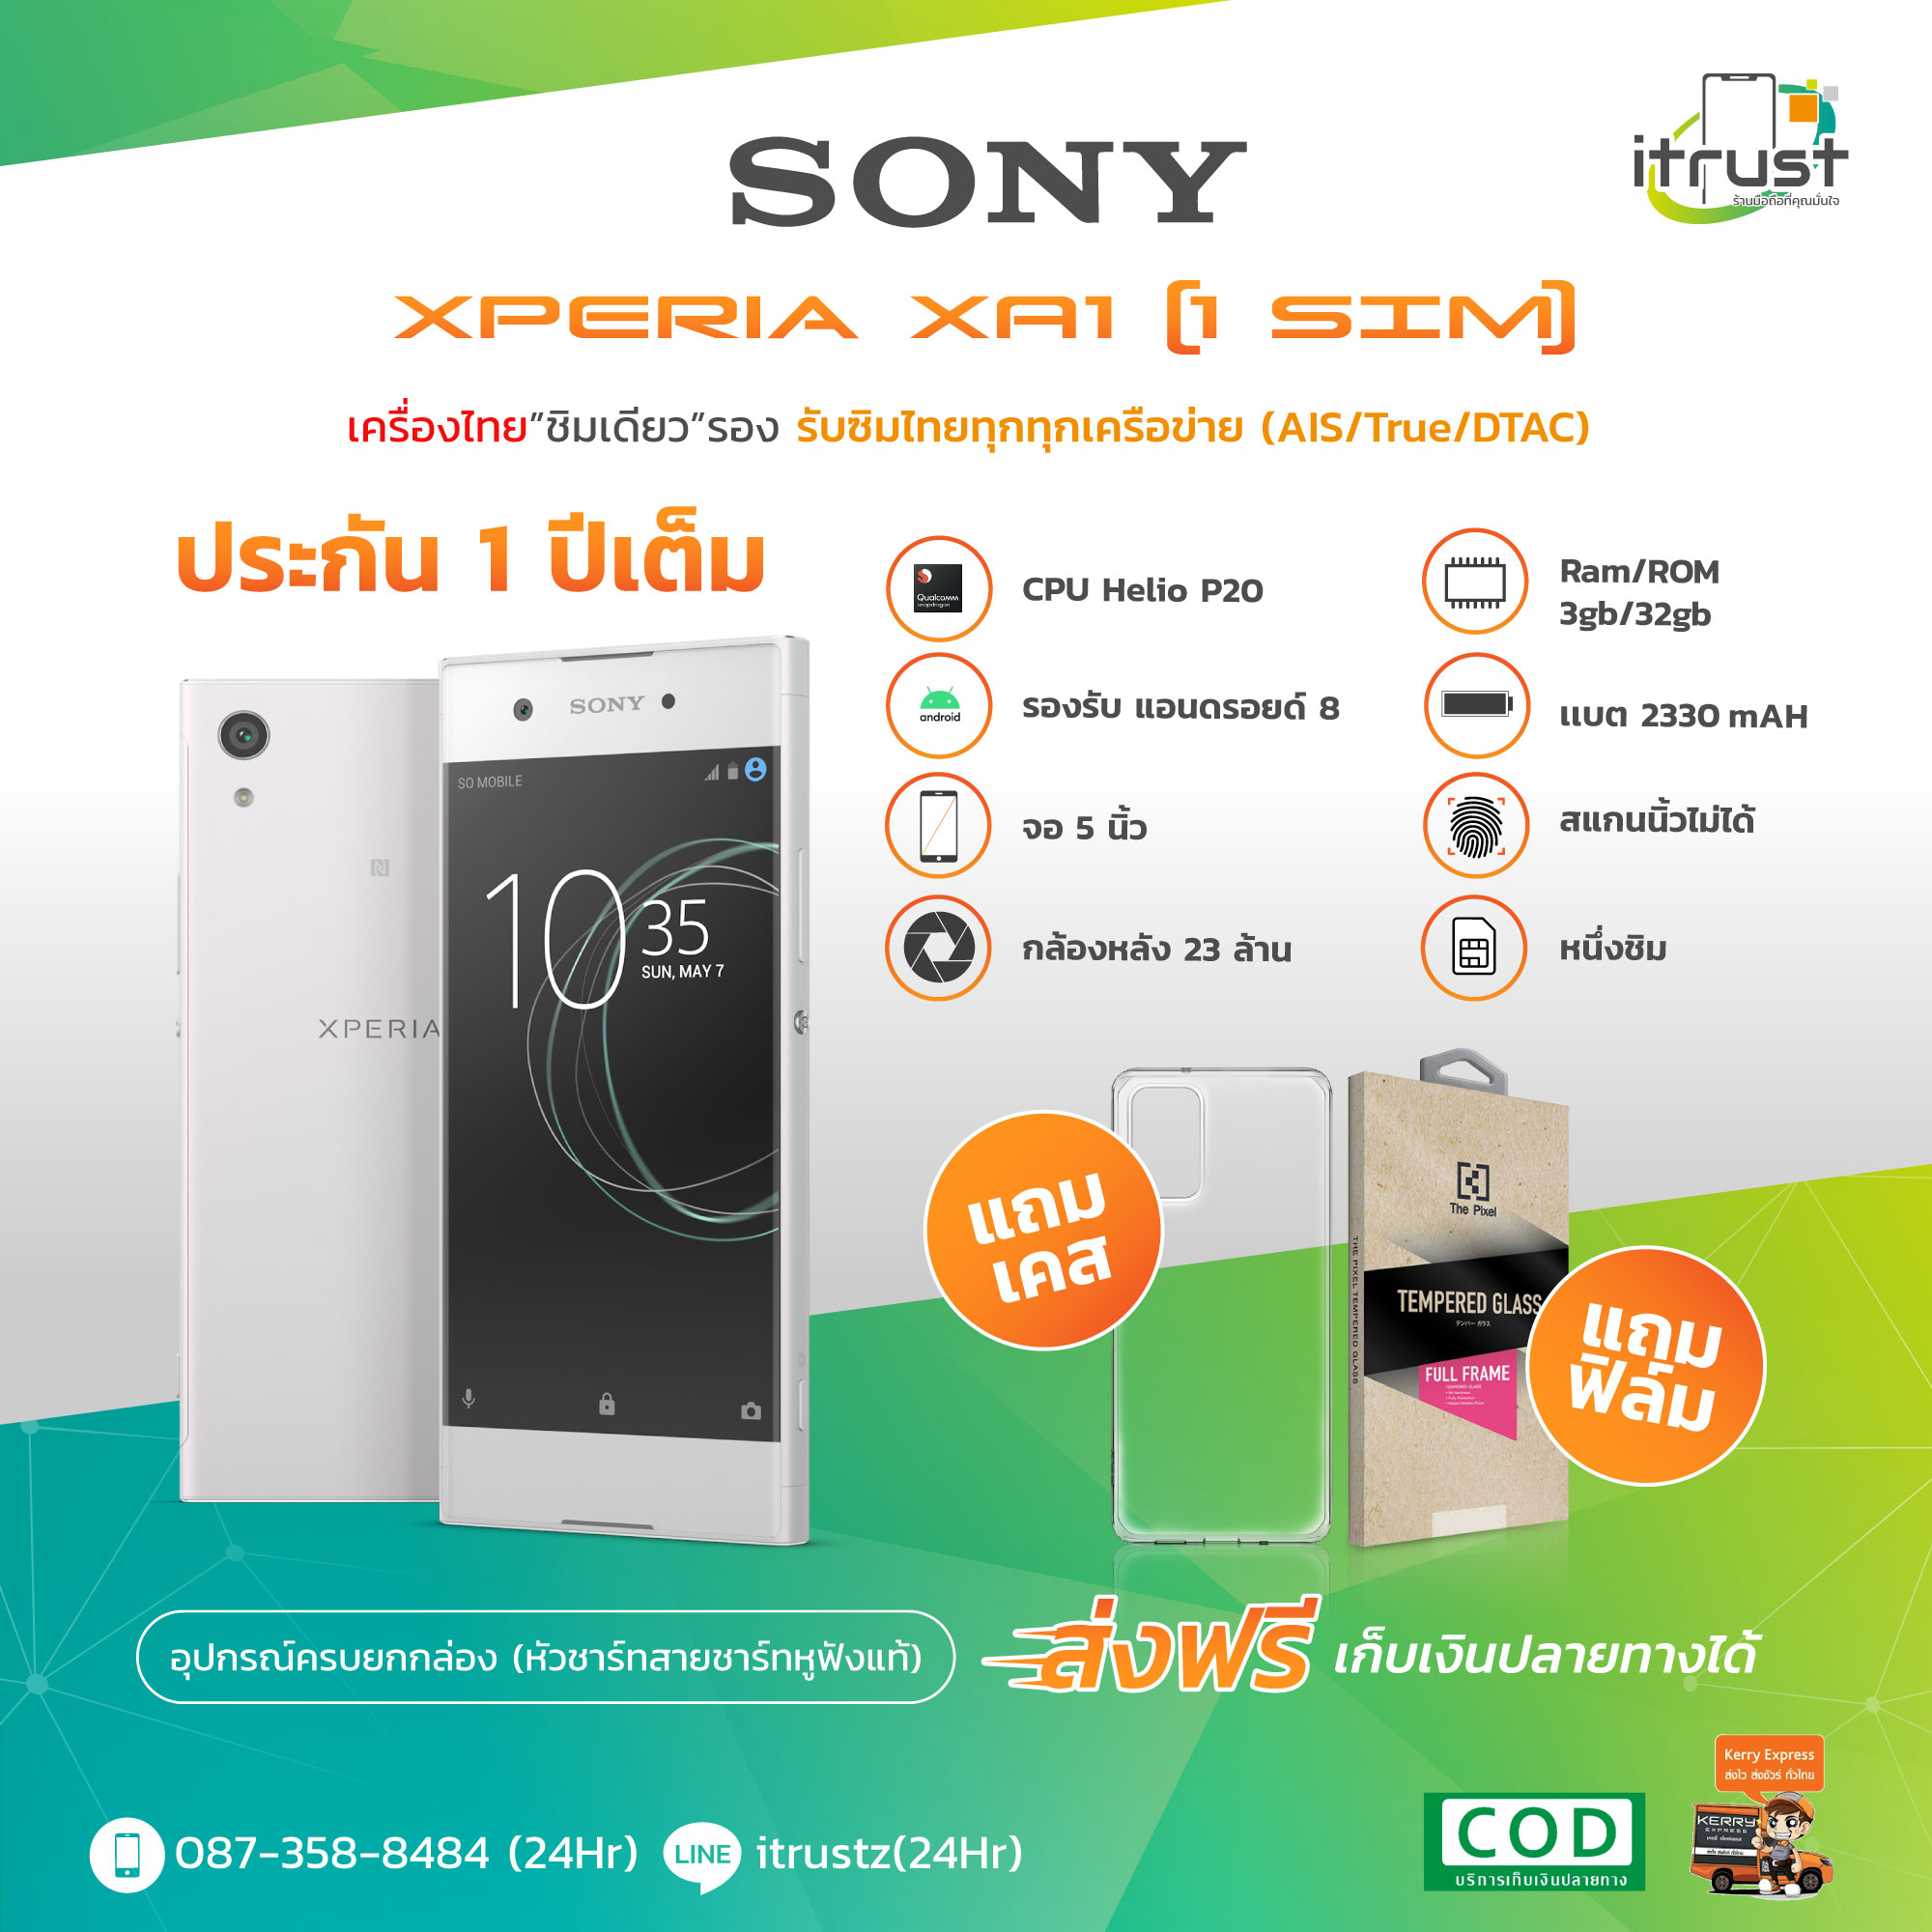 Sony Xperia XA1/เครื่องไทย/จอ 5นิว/ซิมเดียวหรือสองซิม/Rom 3GB/32GB/มือถือโซนี่ ของใหม่(ประกันร้าน12 เดือน)ร้าน itrust Line ID:itrustz ติดต่อได้ 087-358-8484